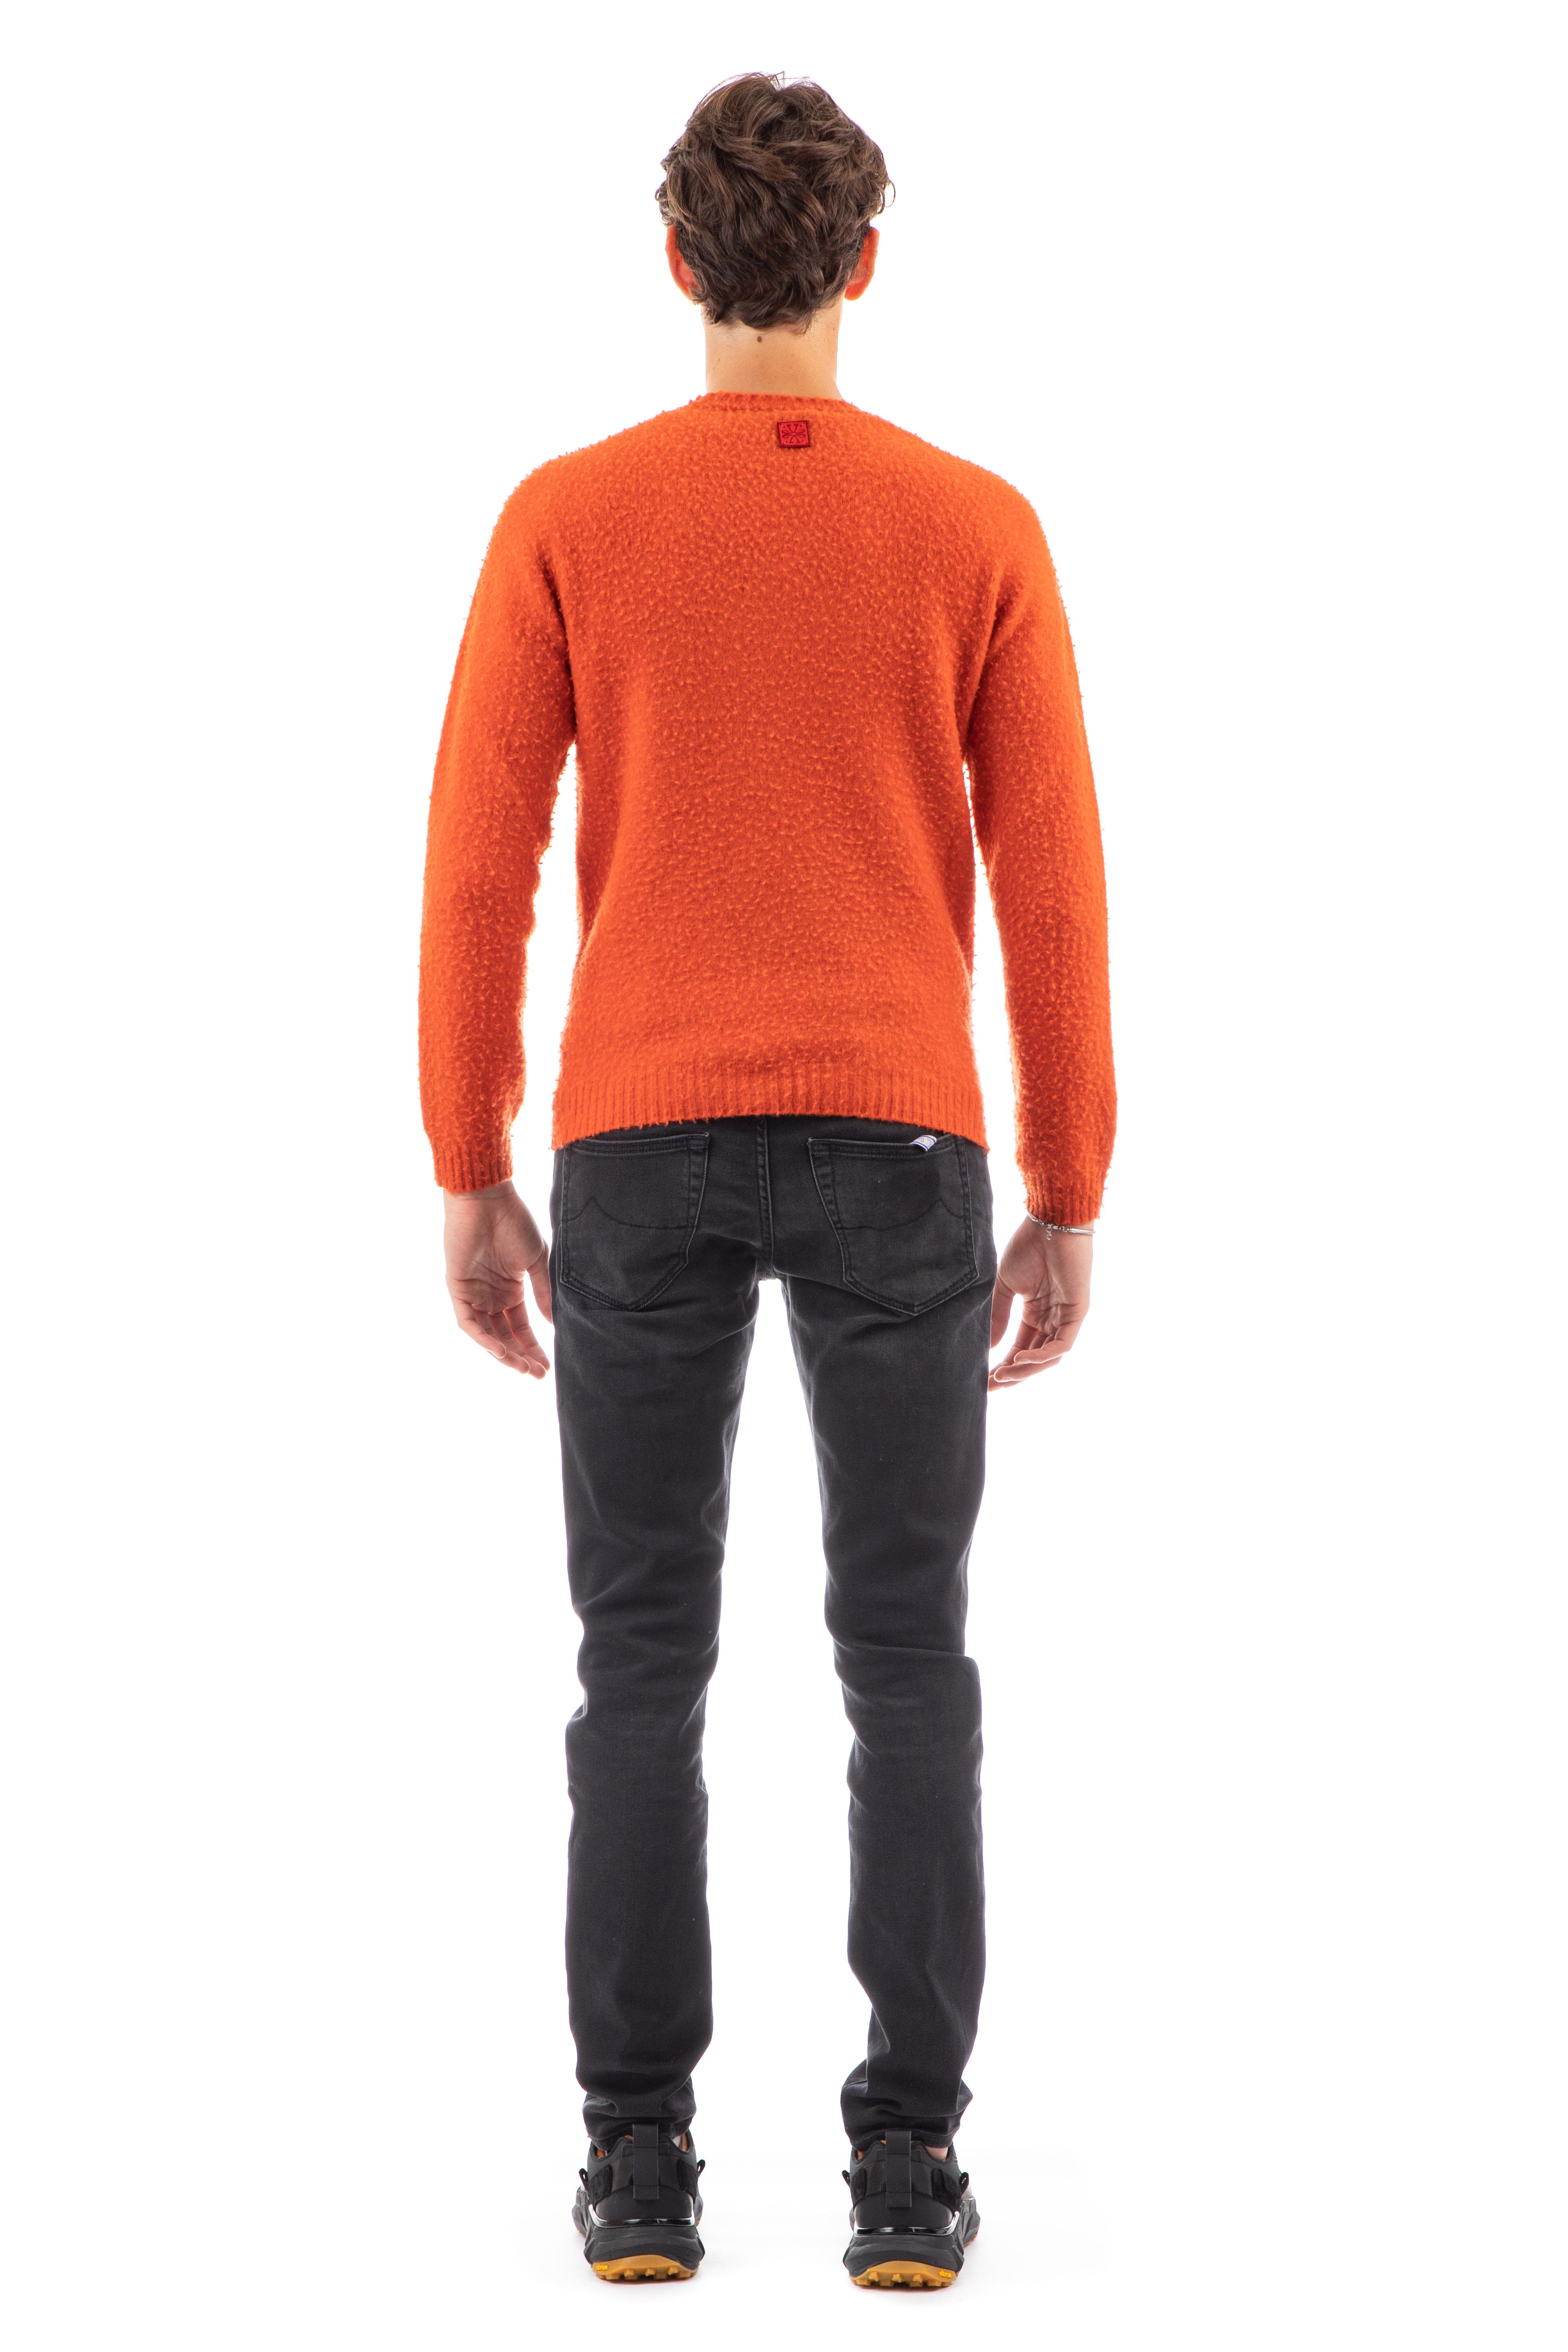 Jacob cohen Casentino wool-cashmere crewneck sweater, knitwear 